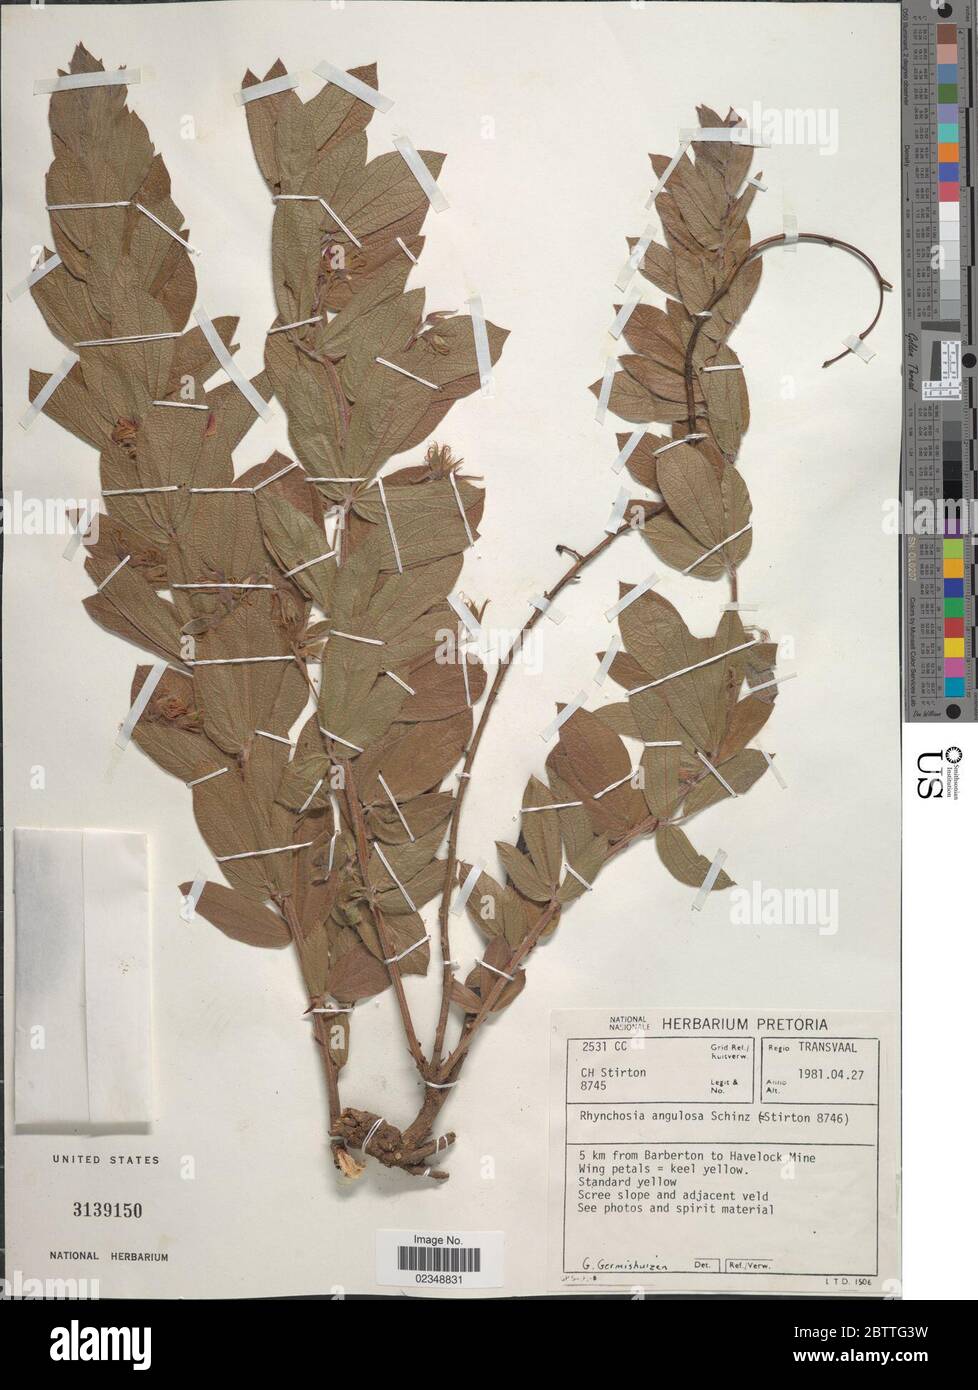 Rhynchosia angulosa Schinz. Stock Photo